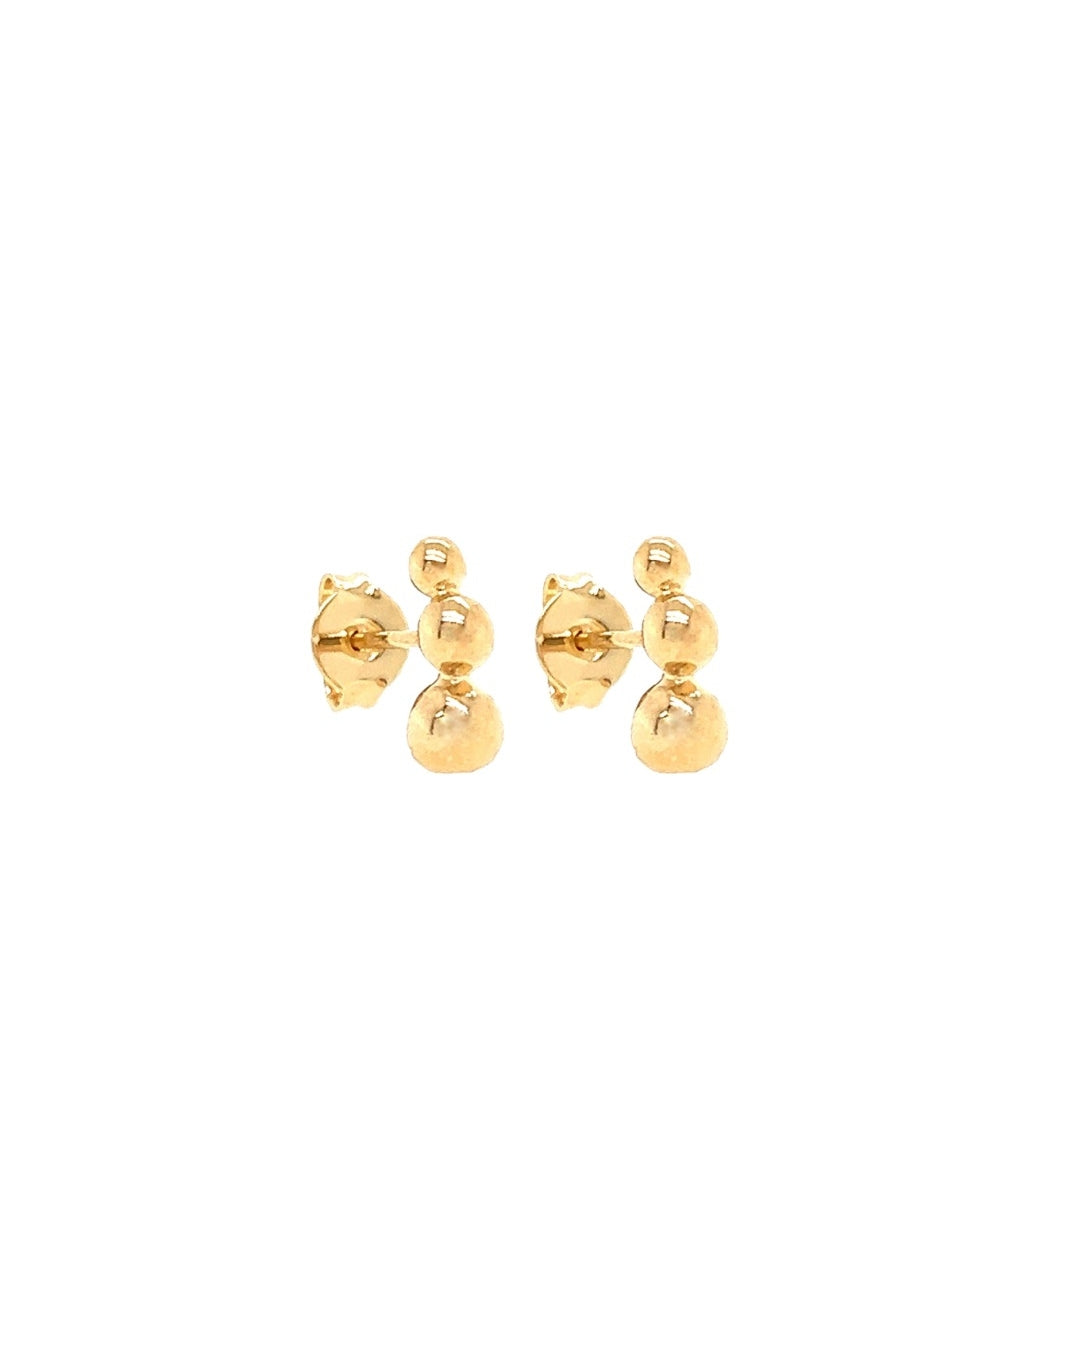 Gold trio bar stud earrings